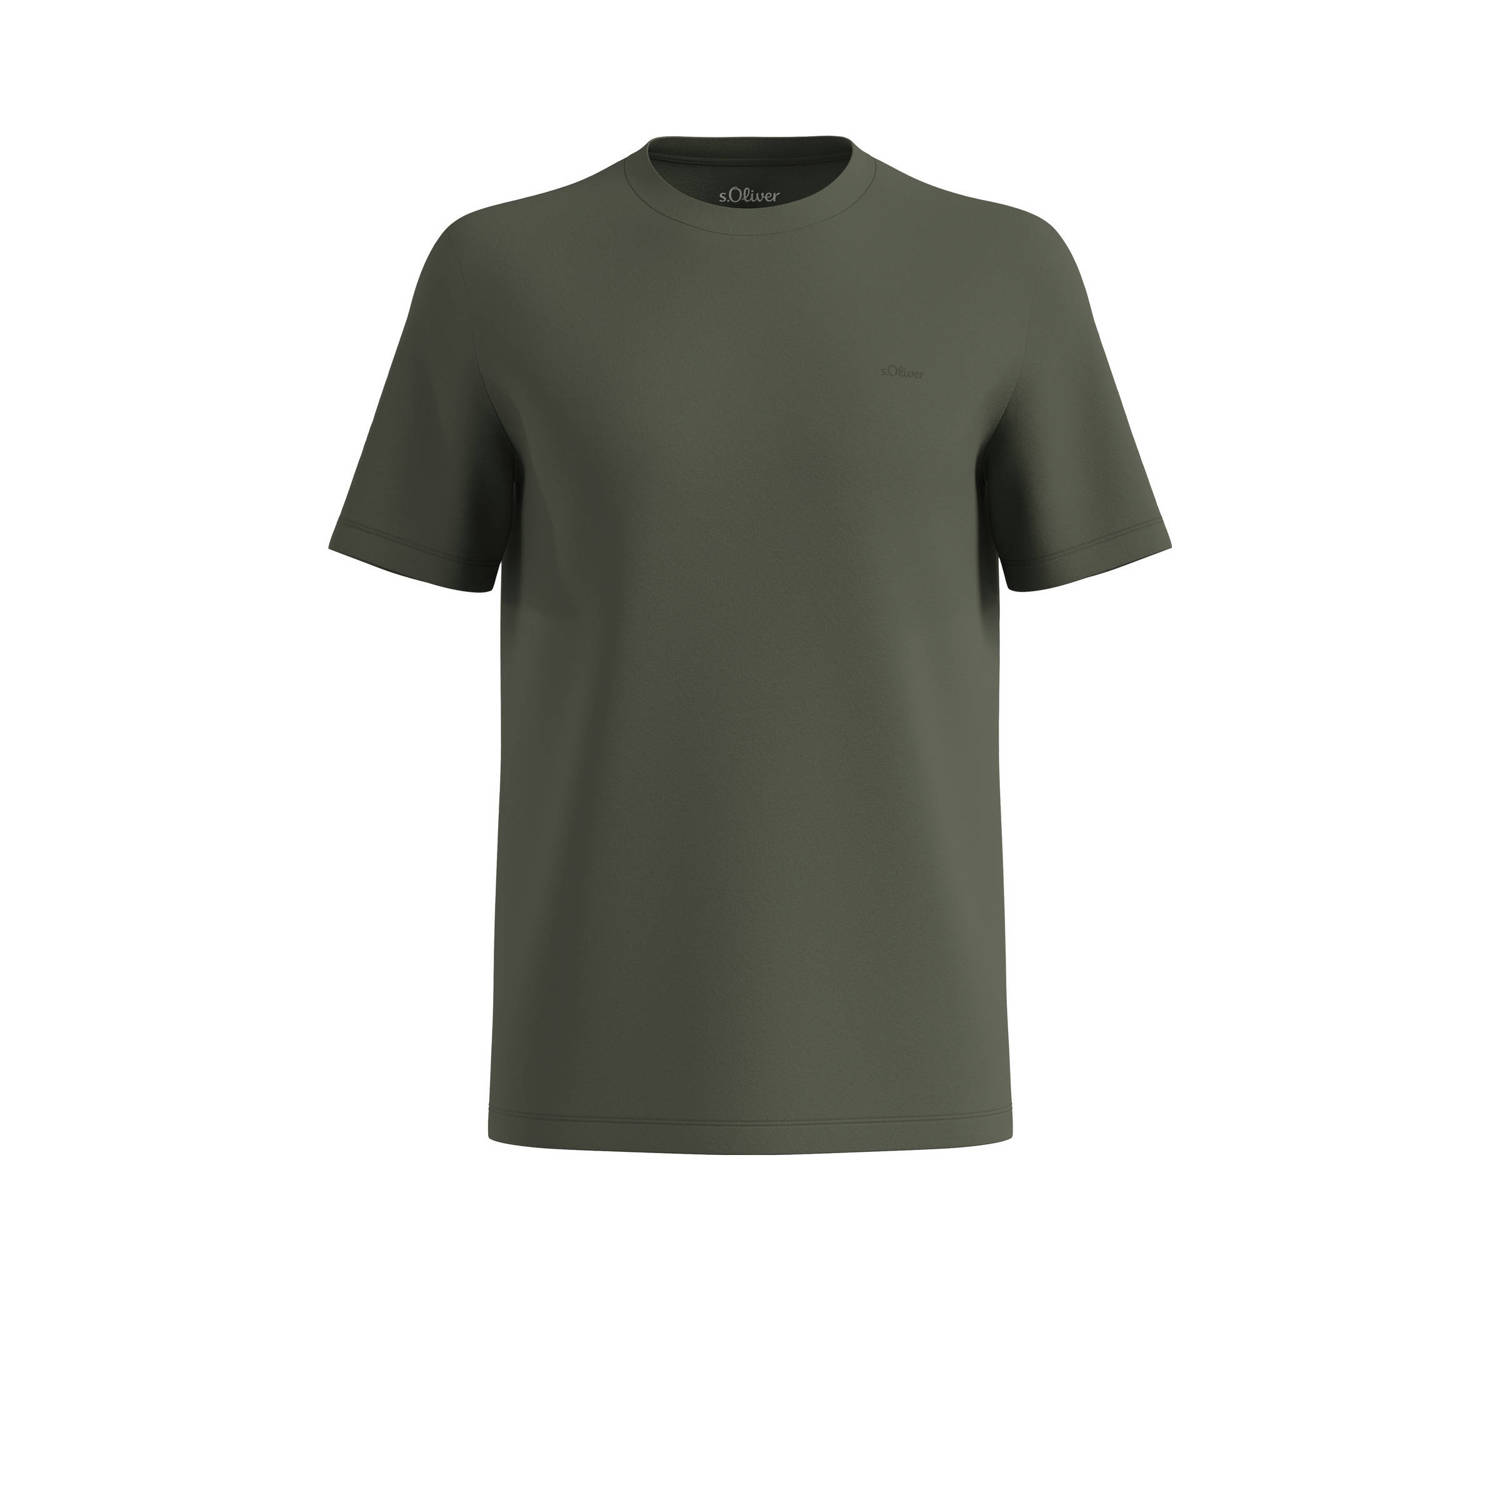 S.Oliver Big Size T-shirt Plus Size khaki groen